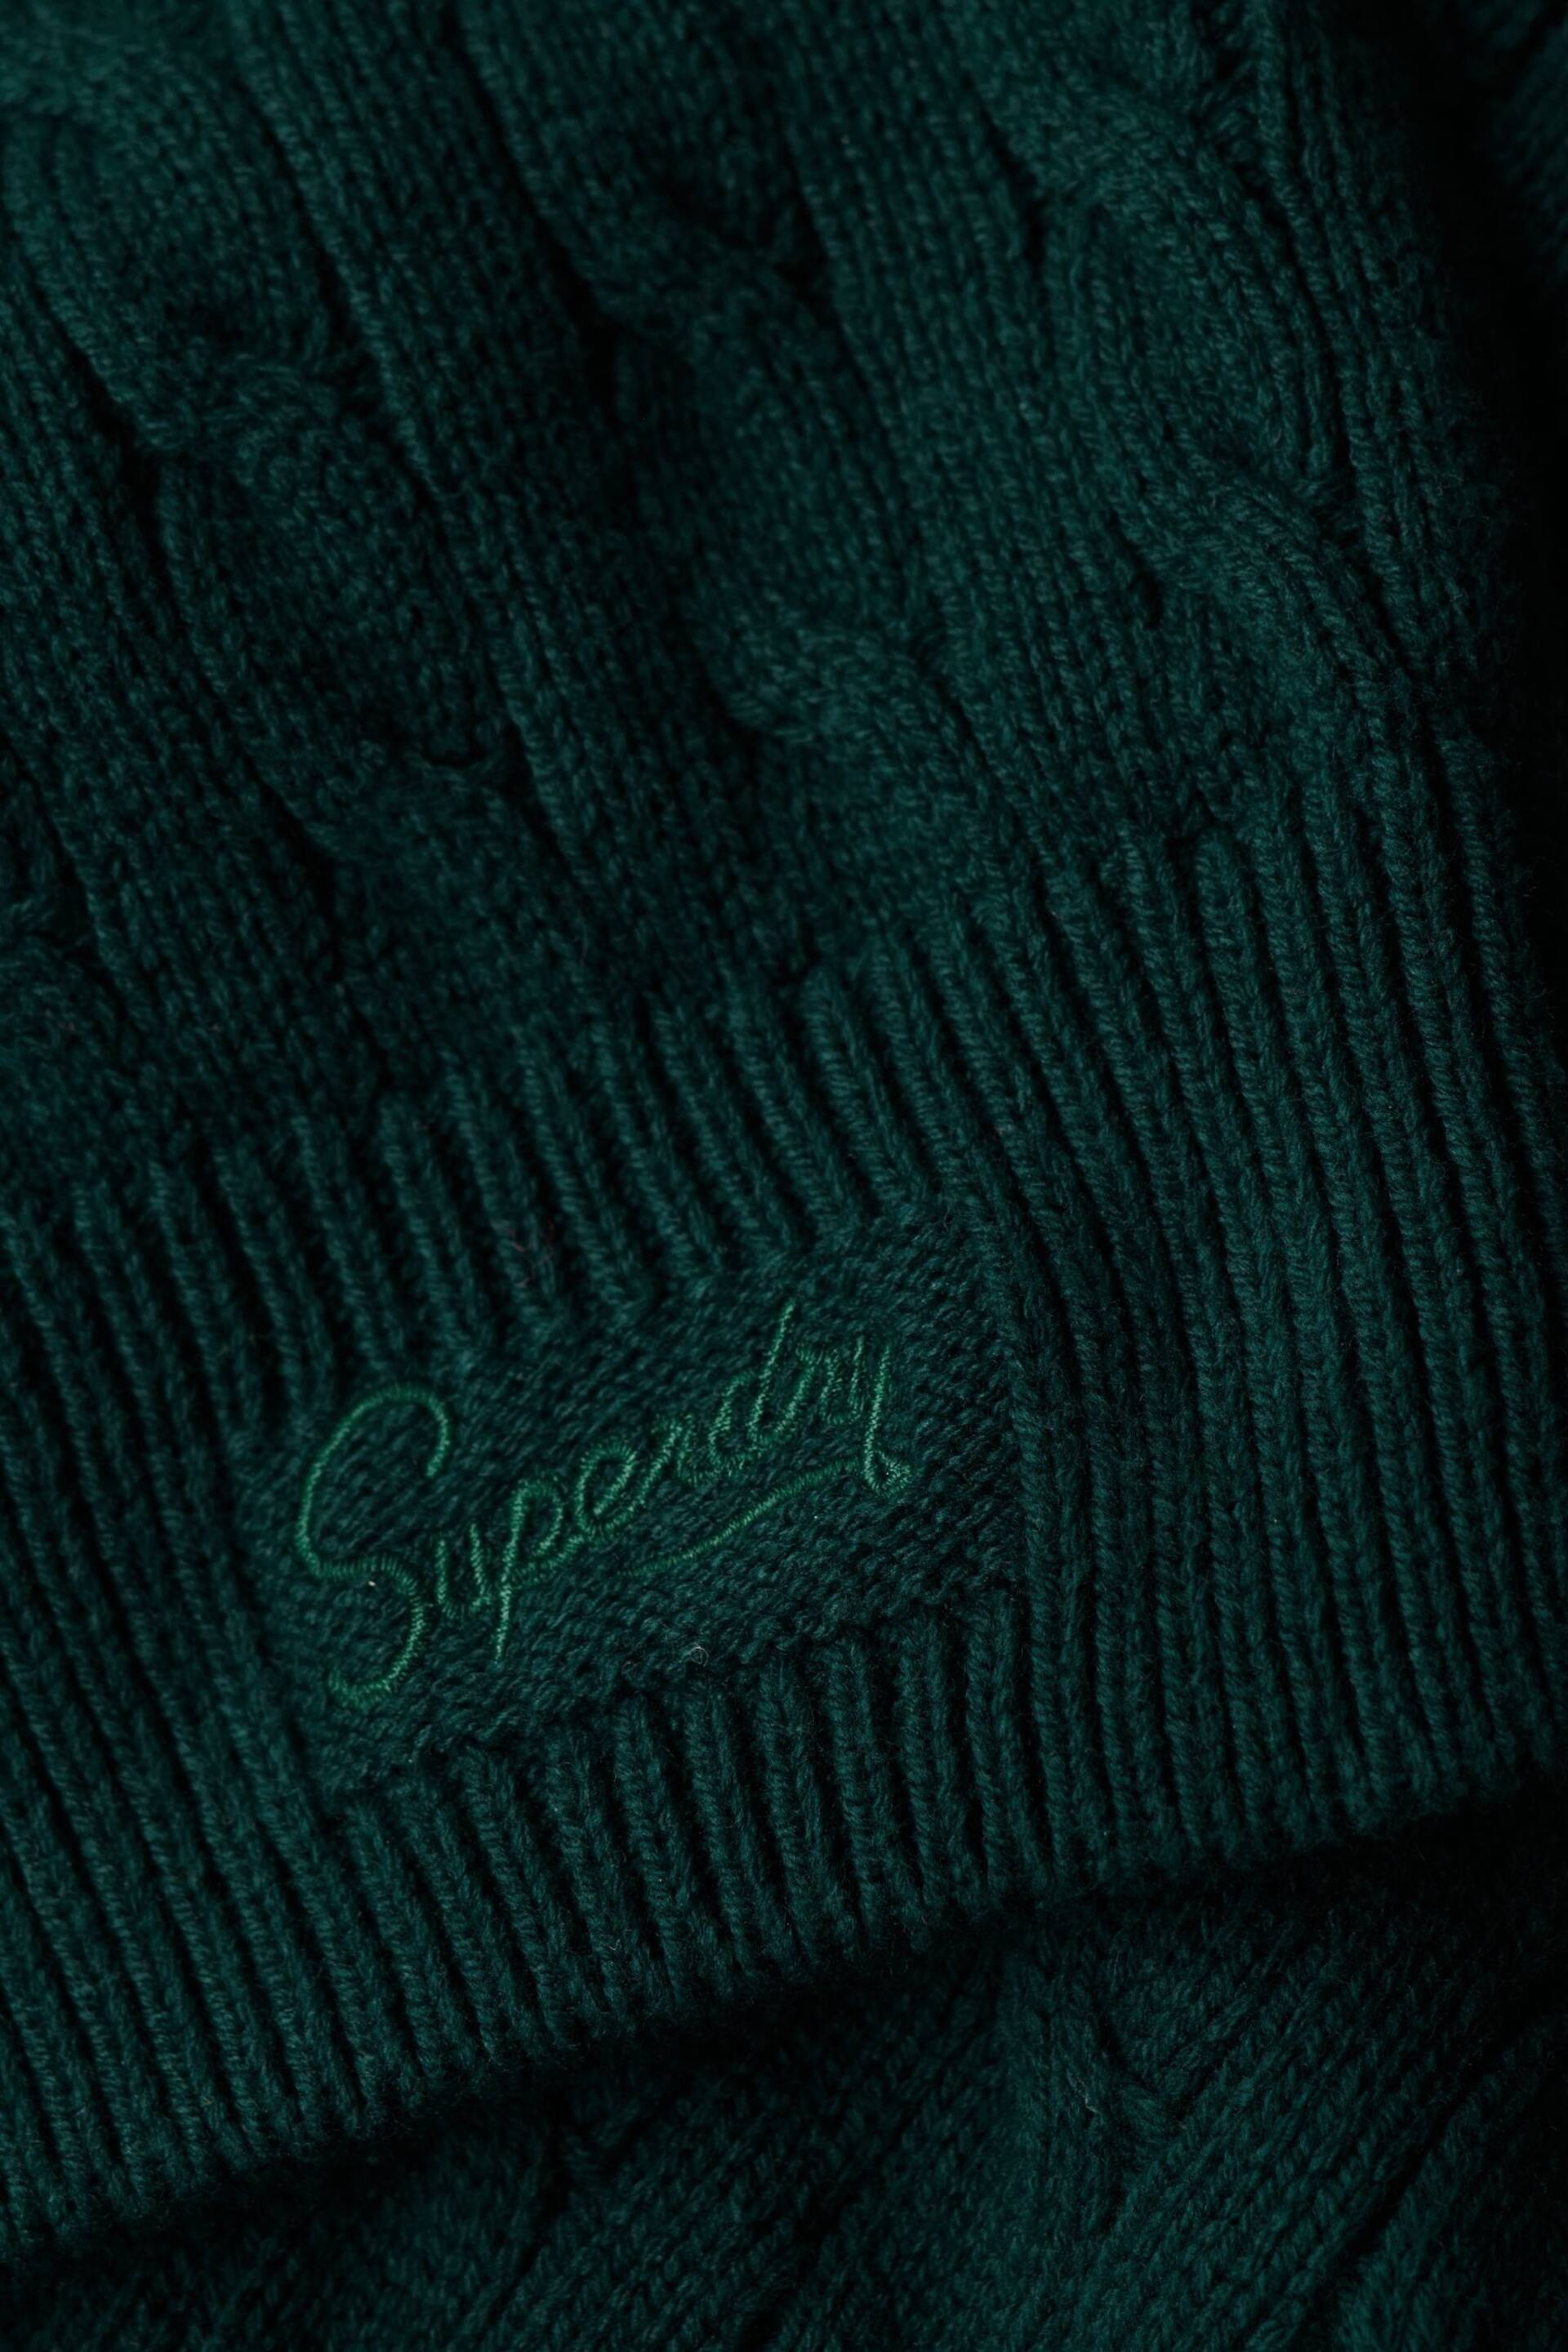 Superdry Green Oversized V-Neck Cable Knit Jumper - Image 5 of 5